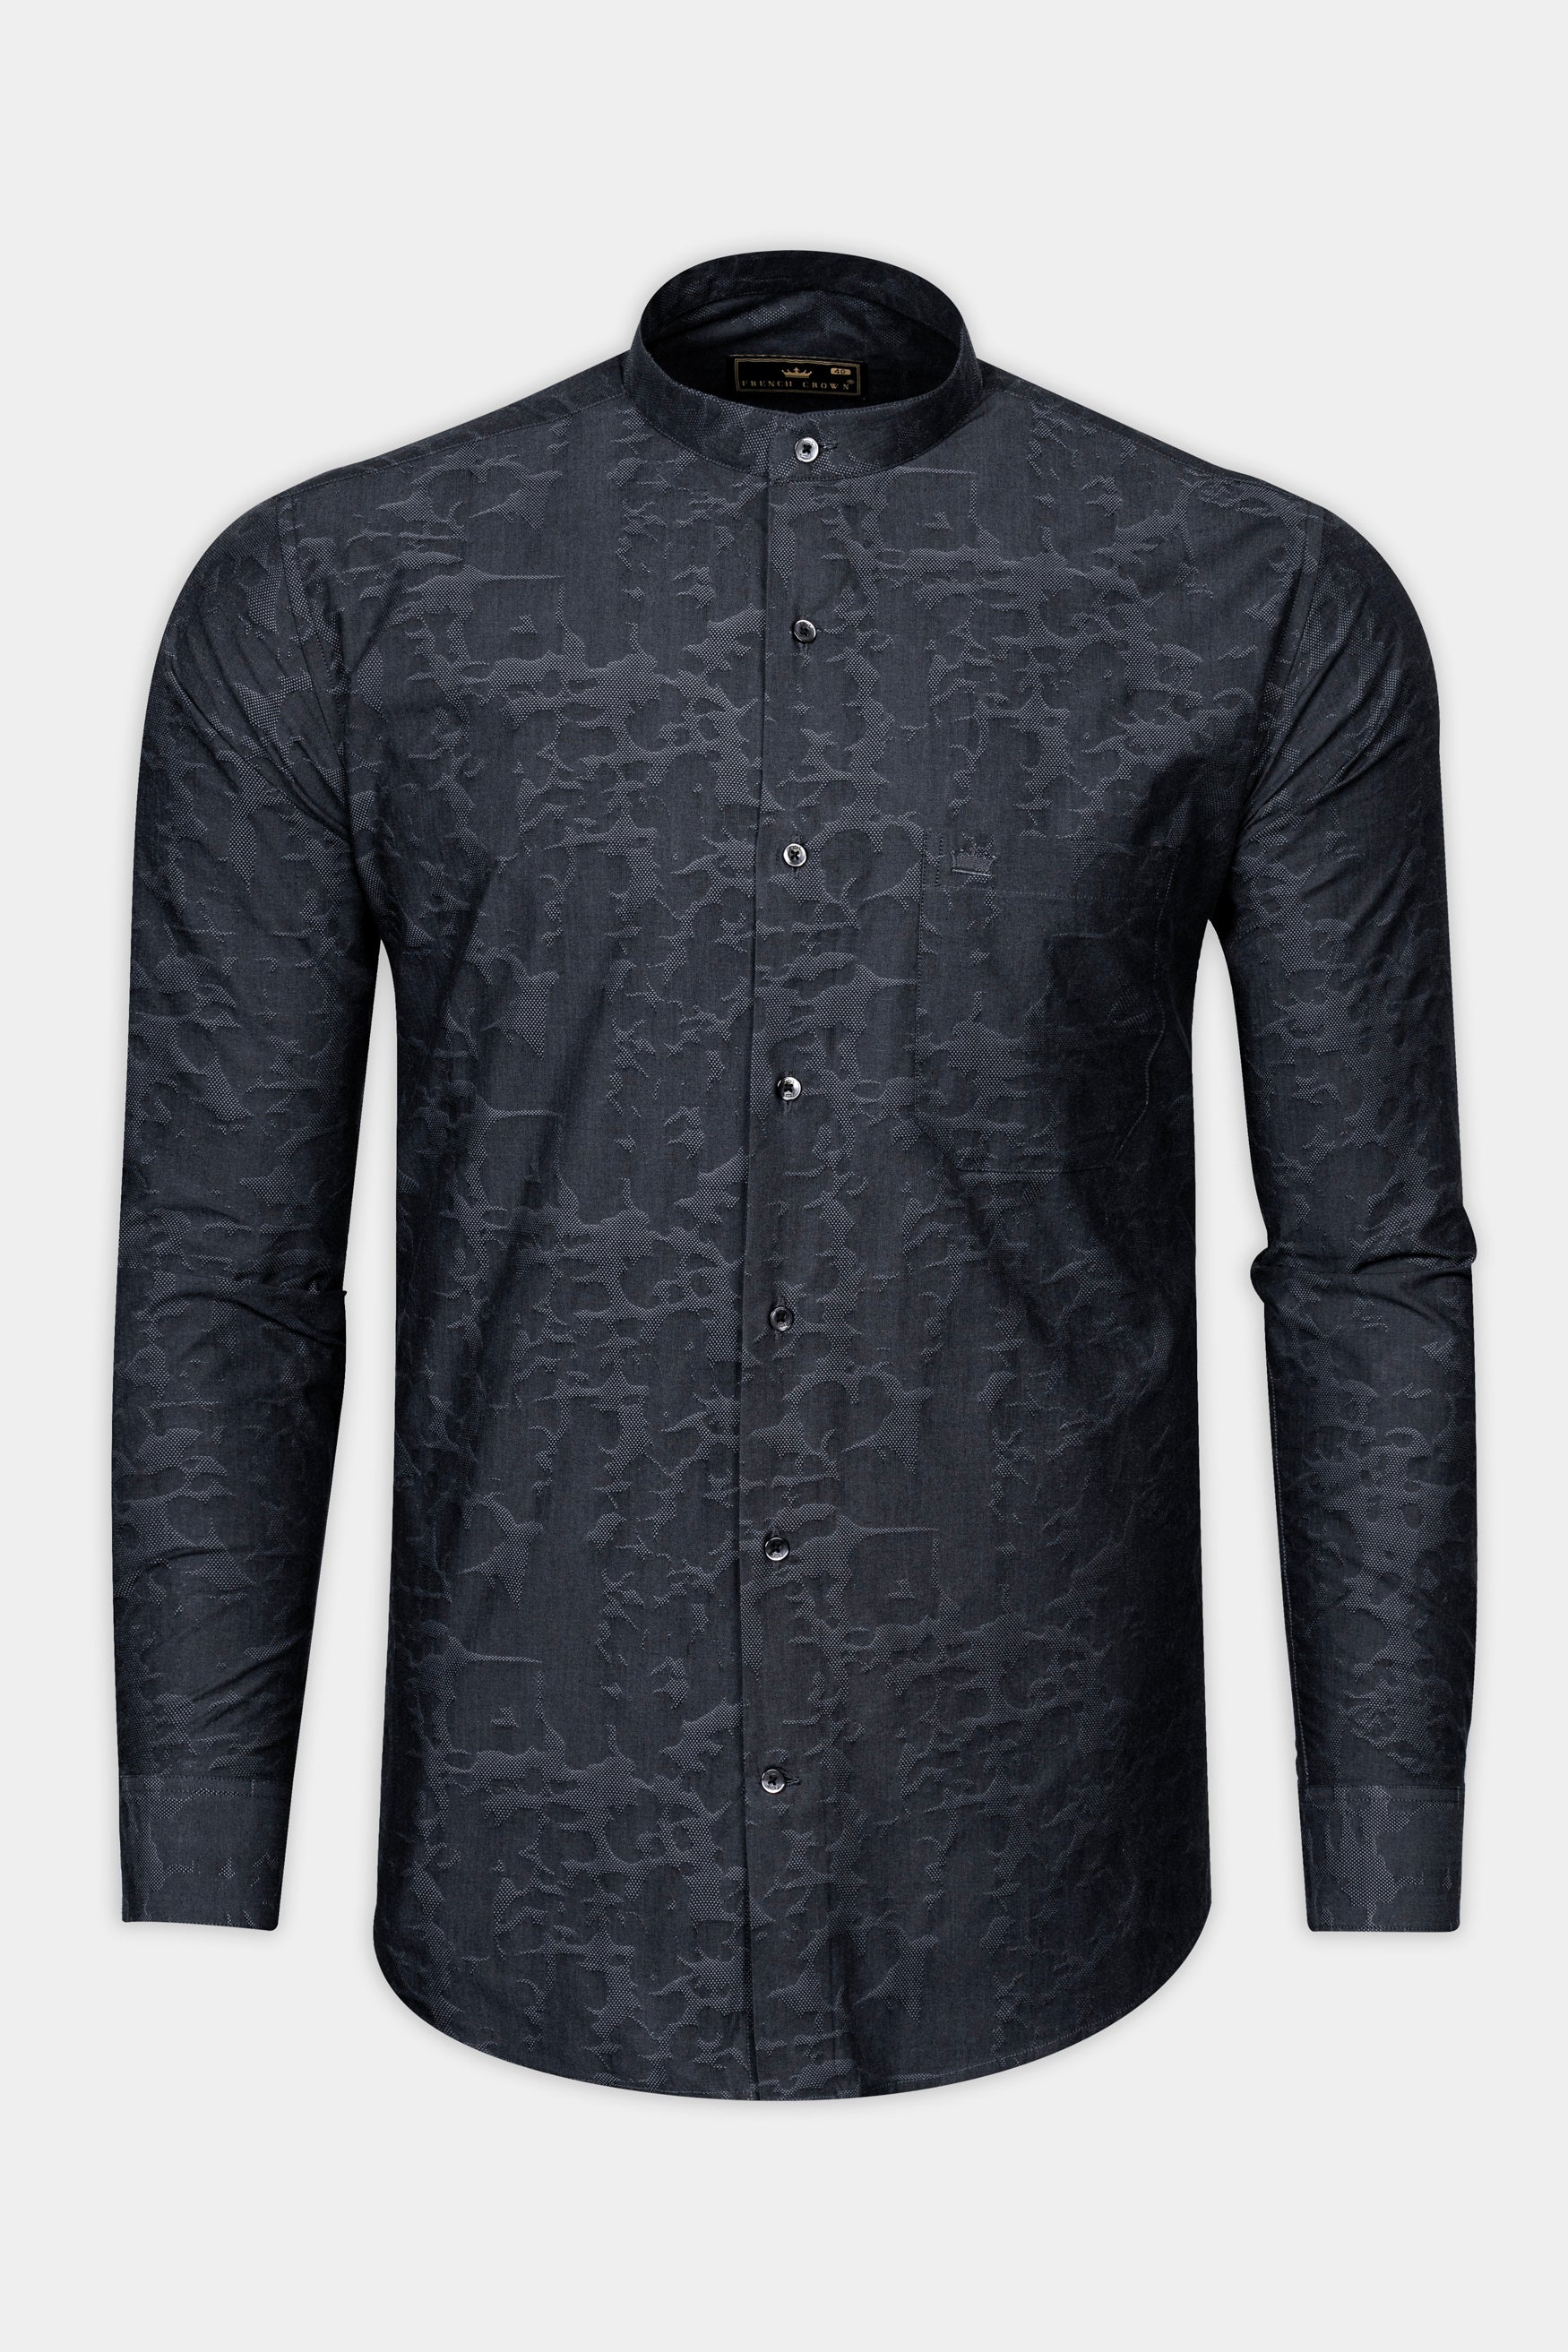 Shark blue Jacquard Textured Premium Giza Cotton Shirt